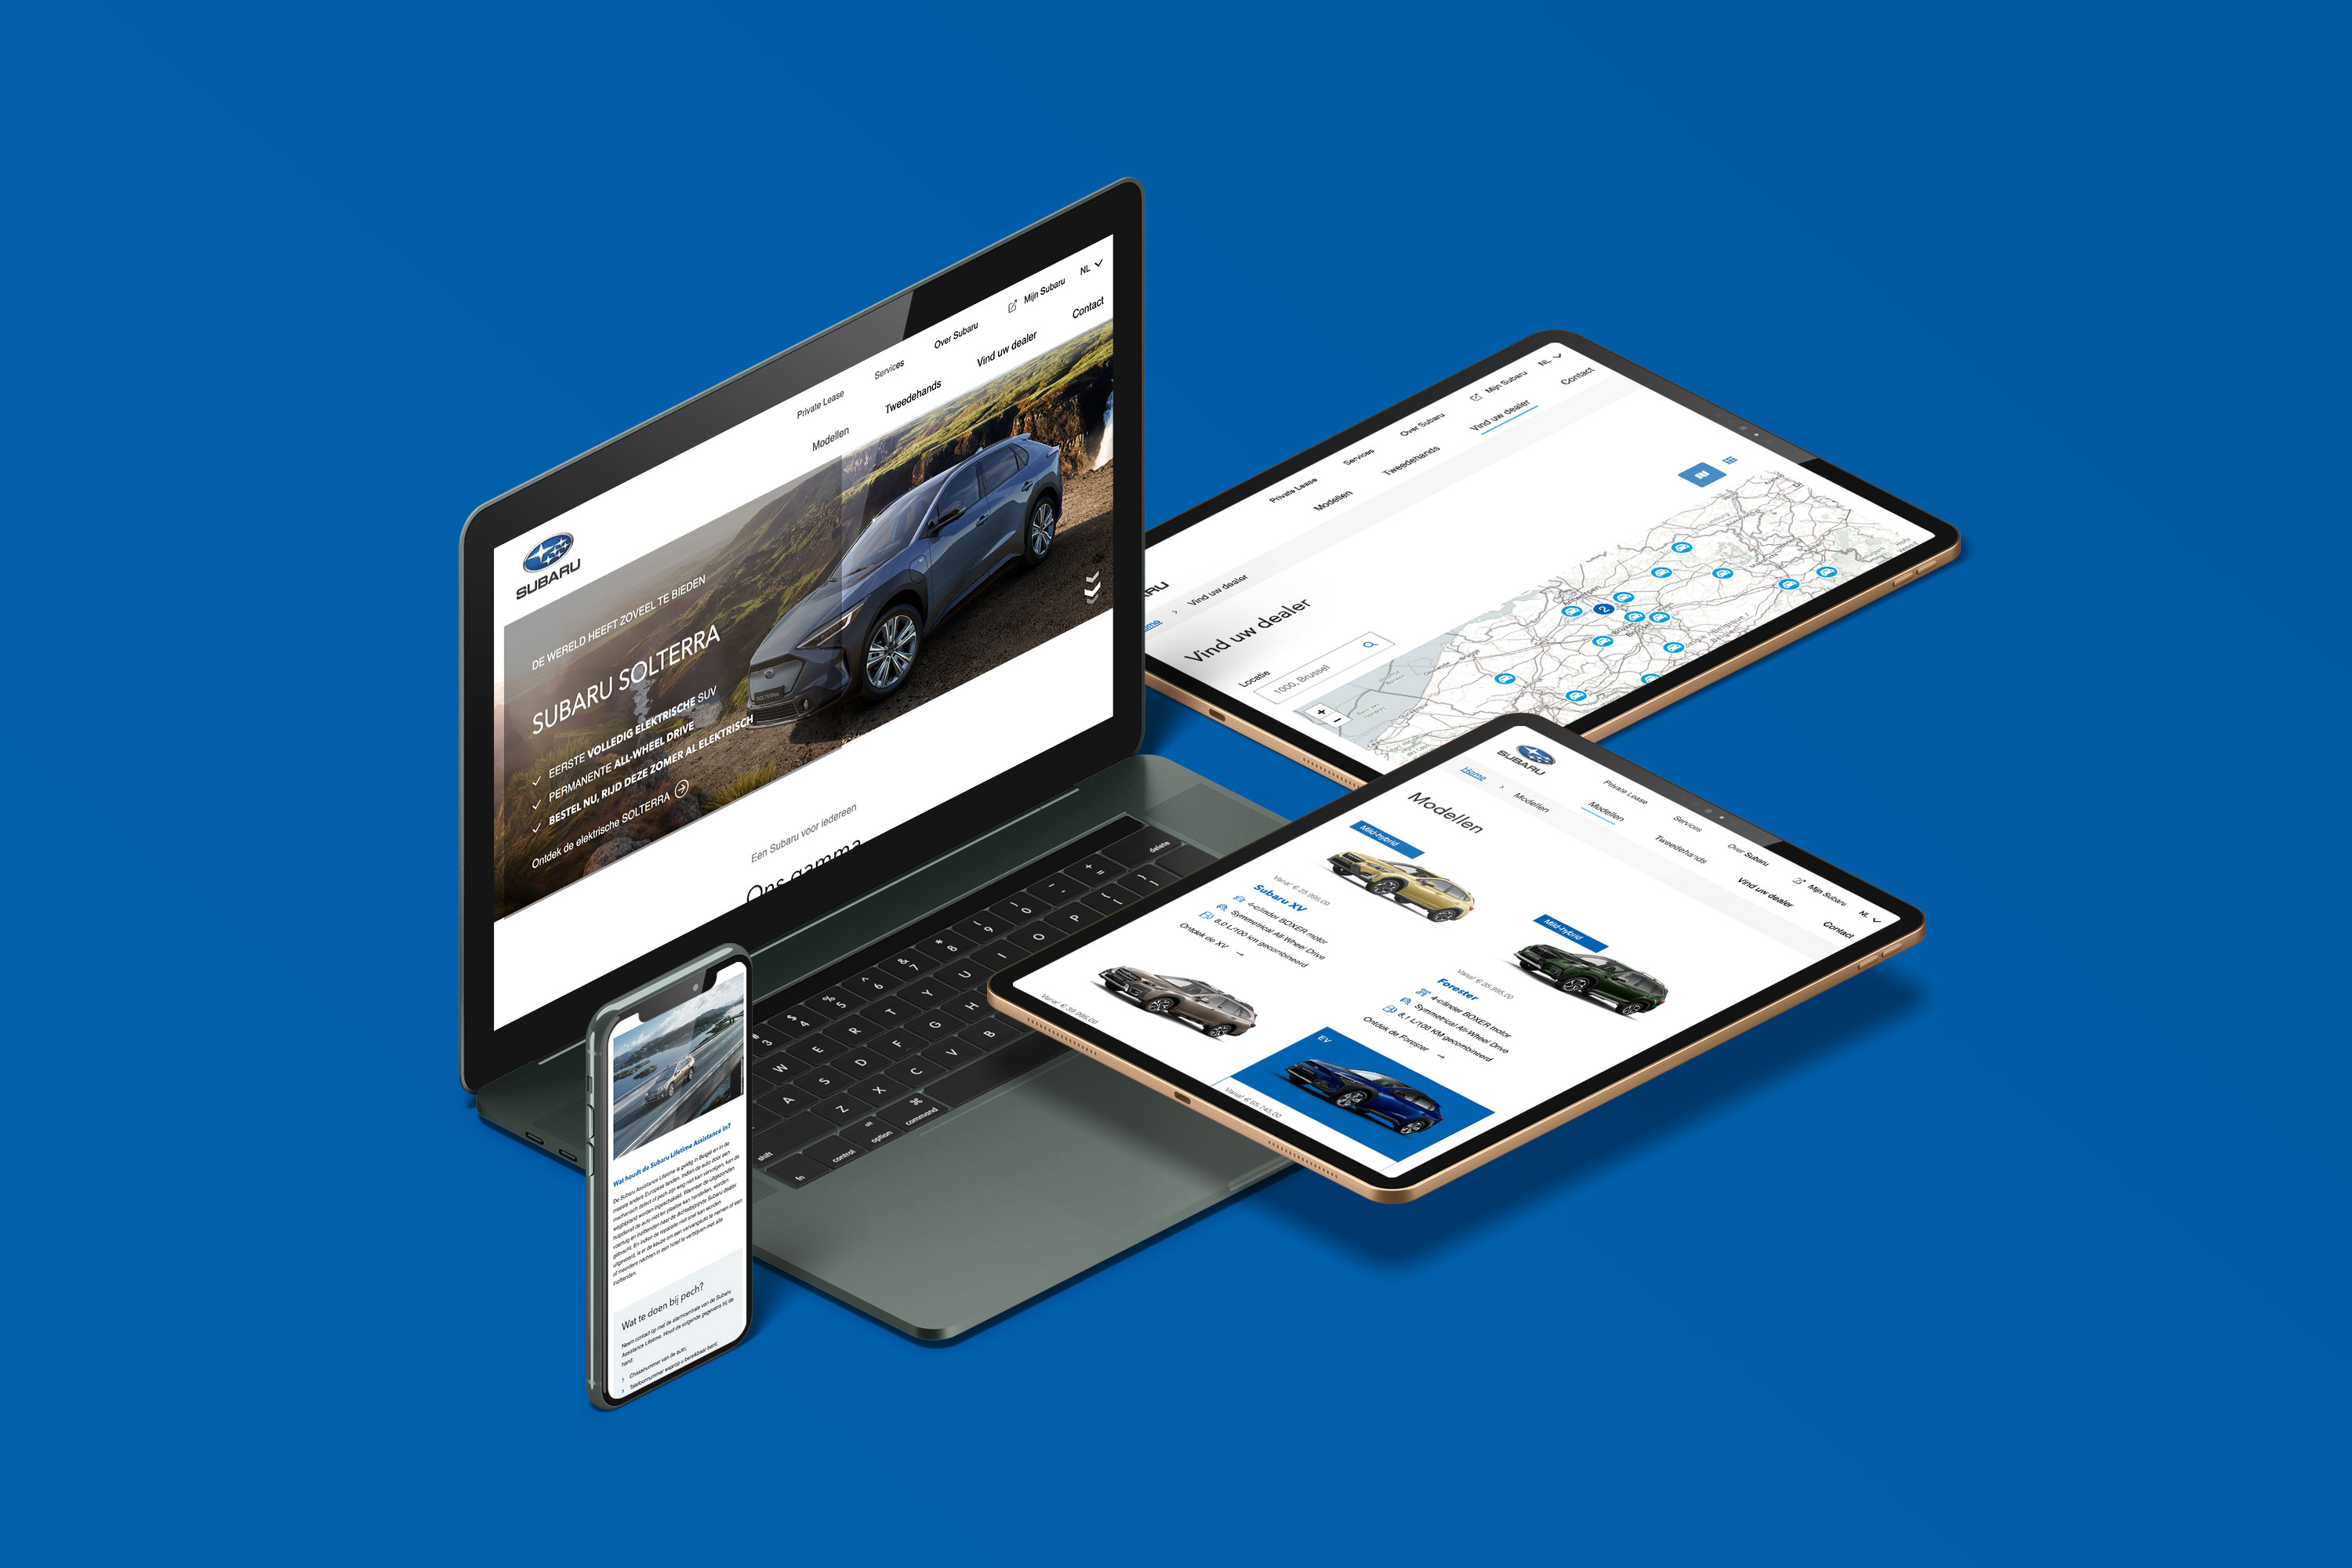 Subaru website